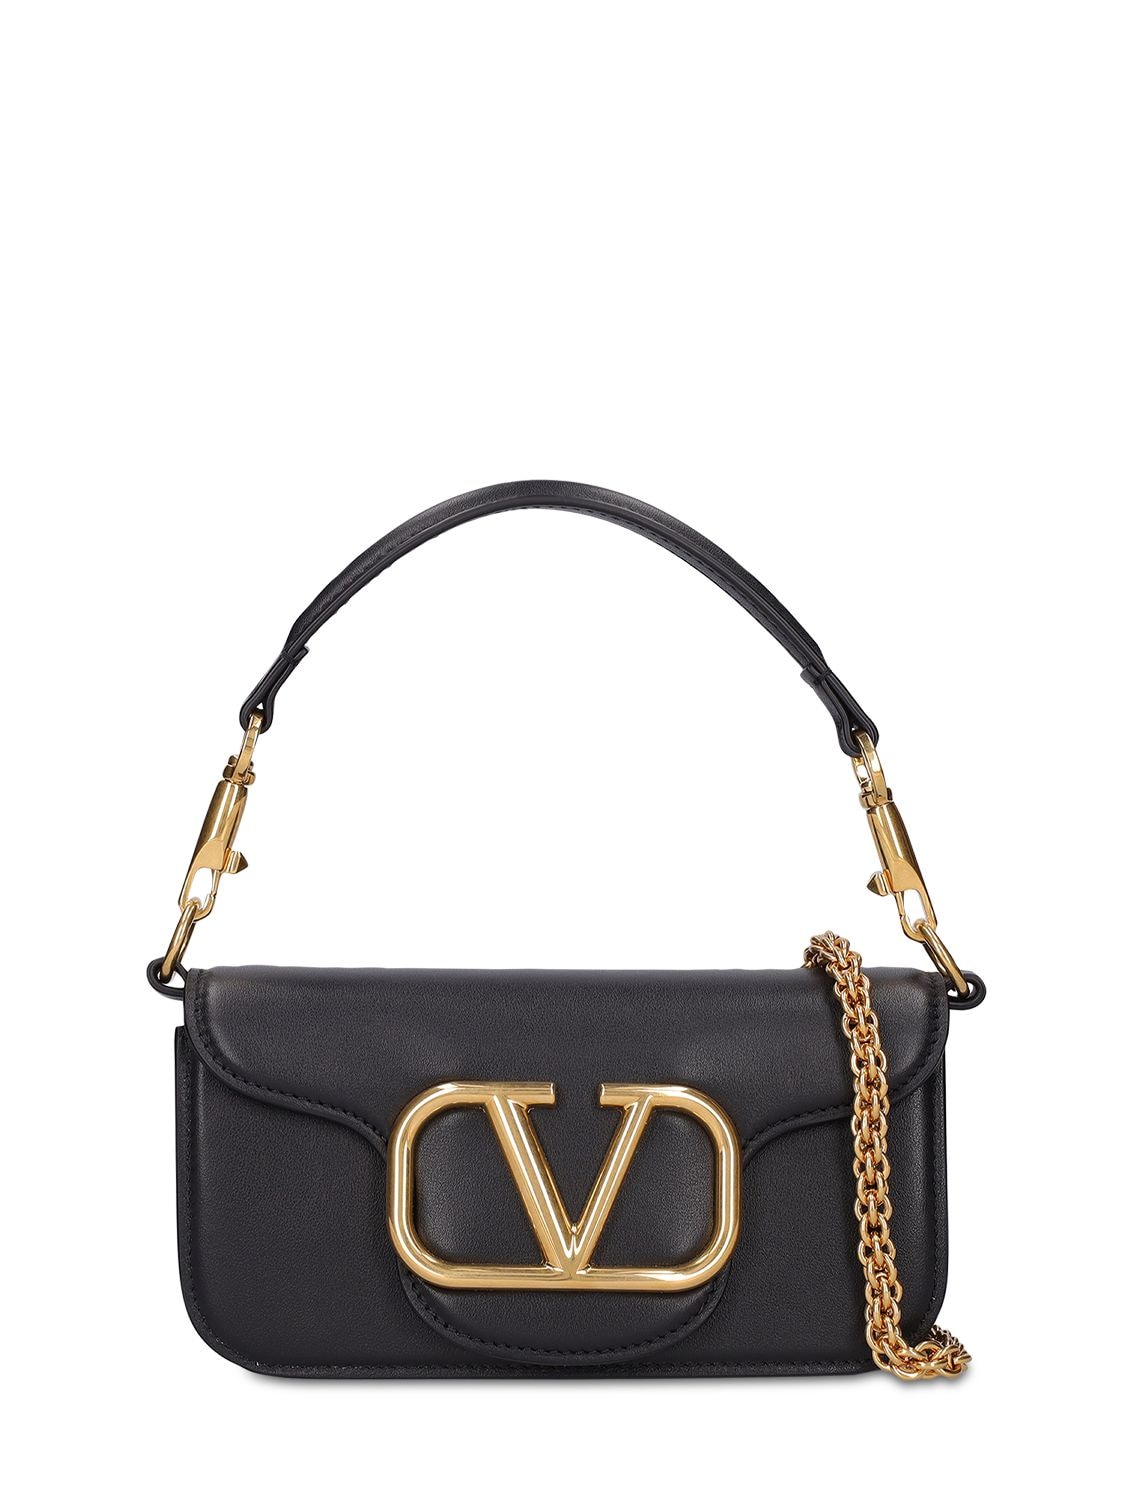 Valentino Garavani Black Small Locò Shoulder Bag With Chain